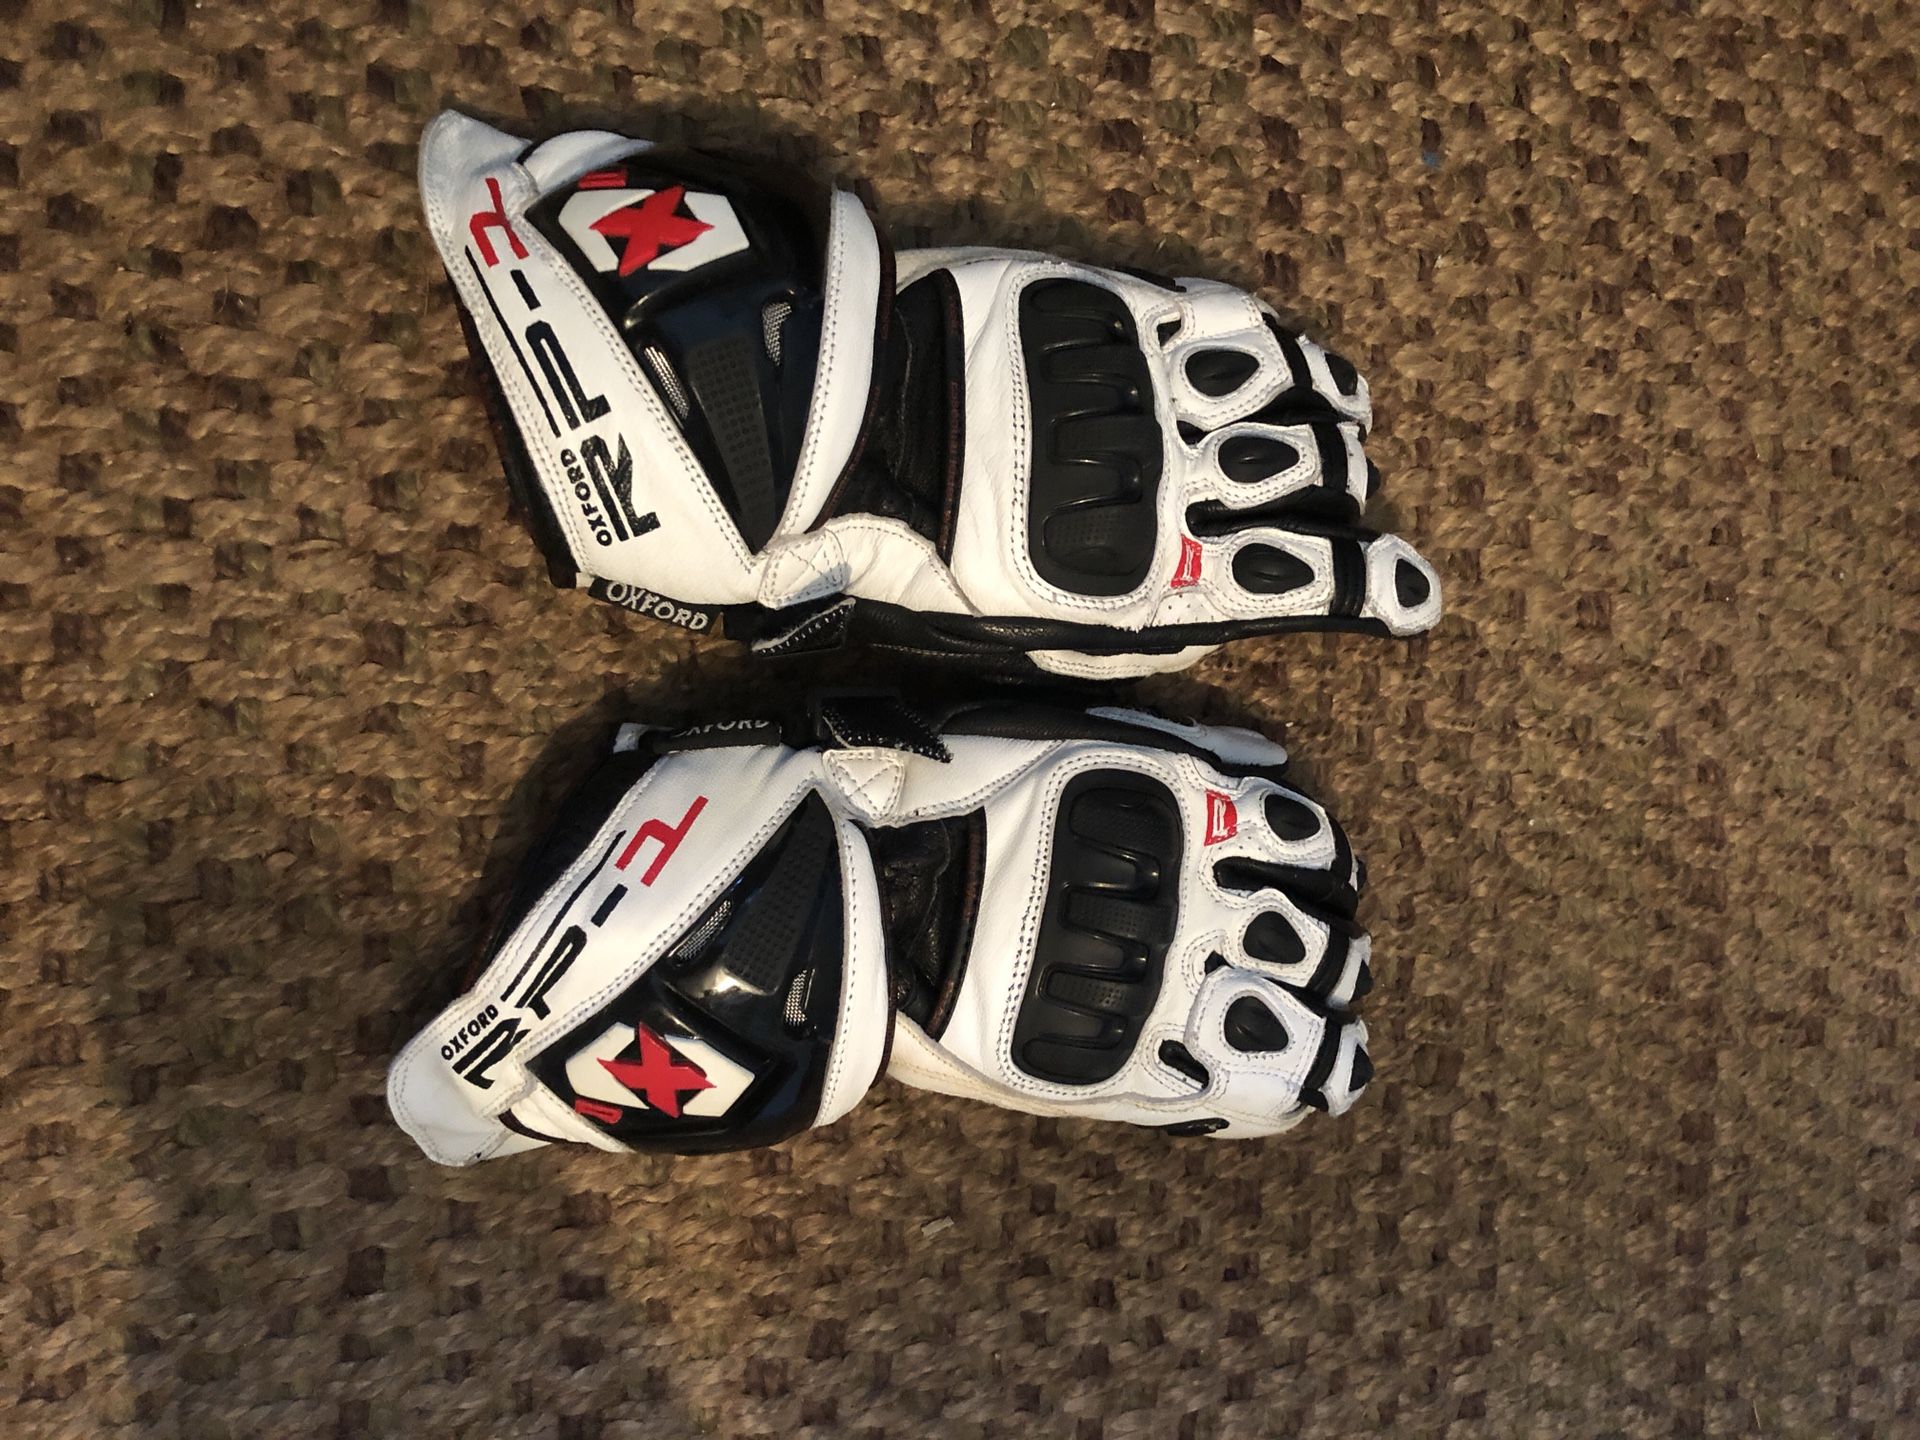 Oxford RP-1 full gauntlet racing gloves